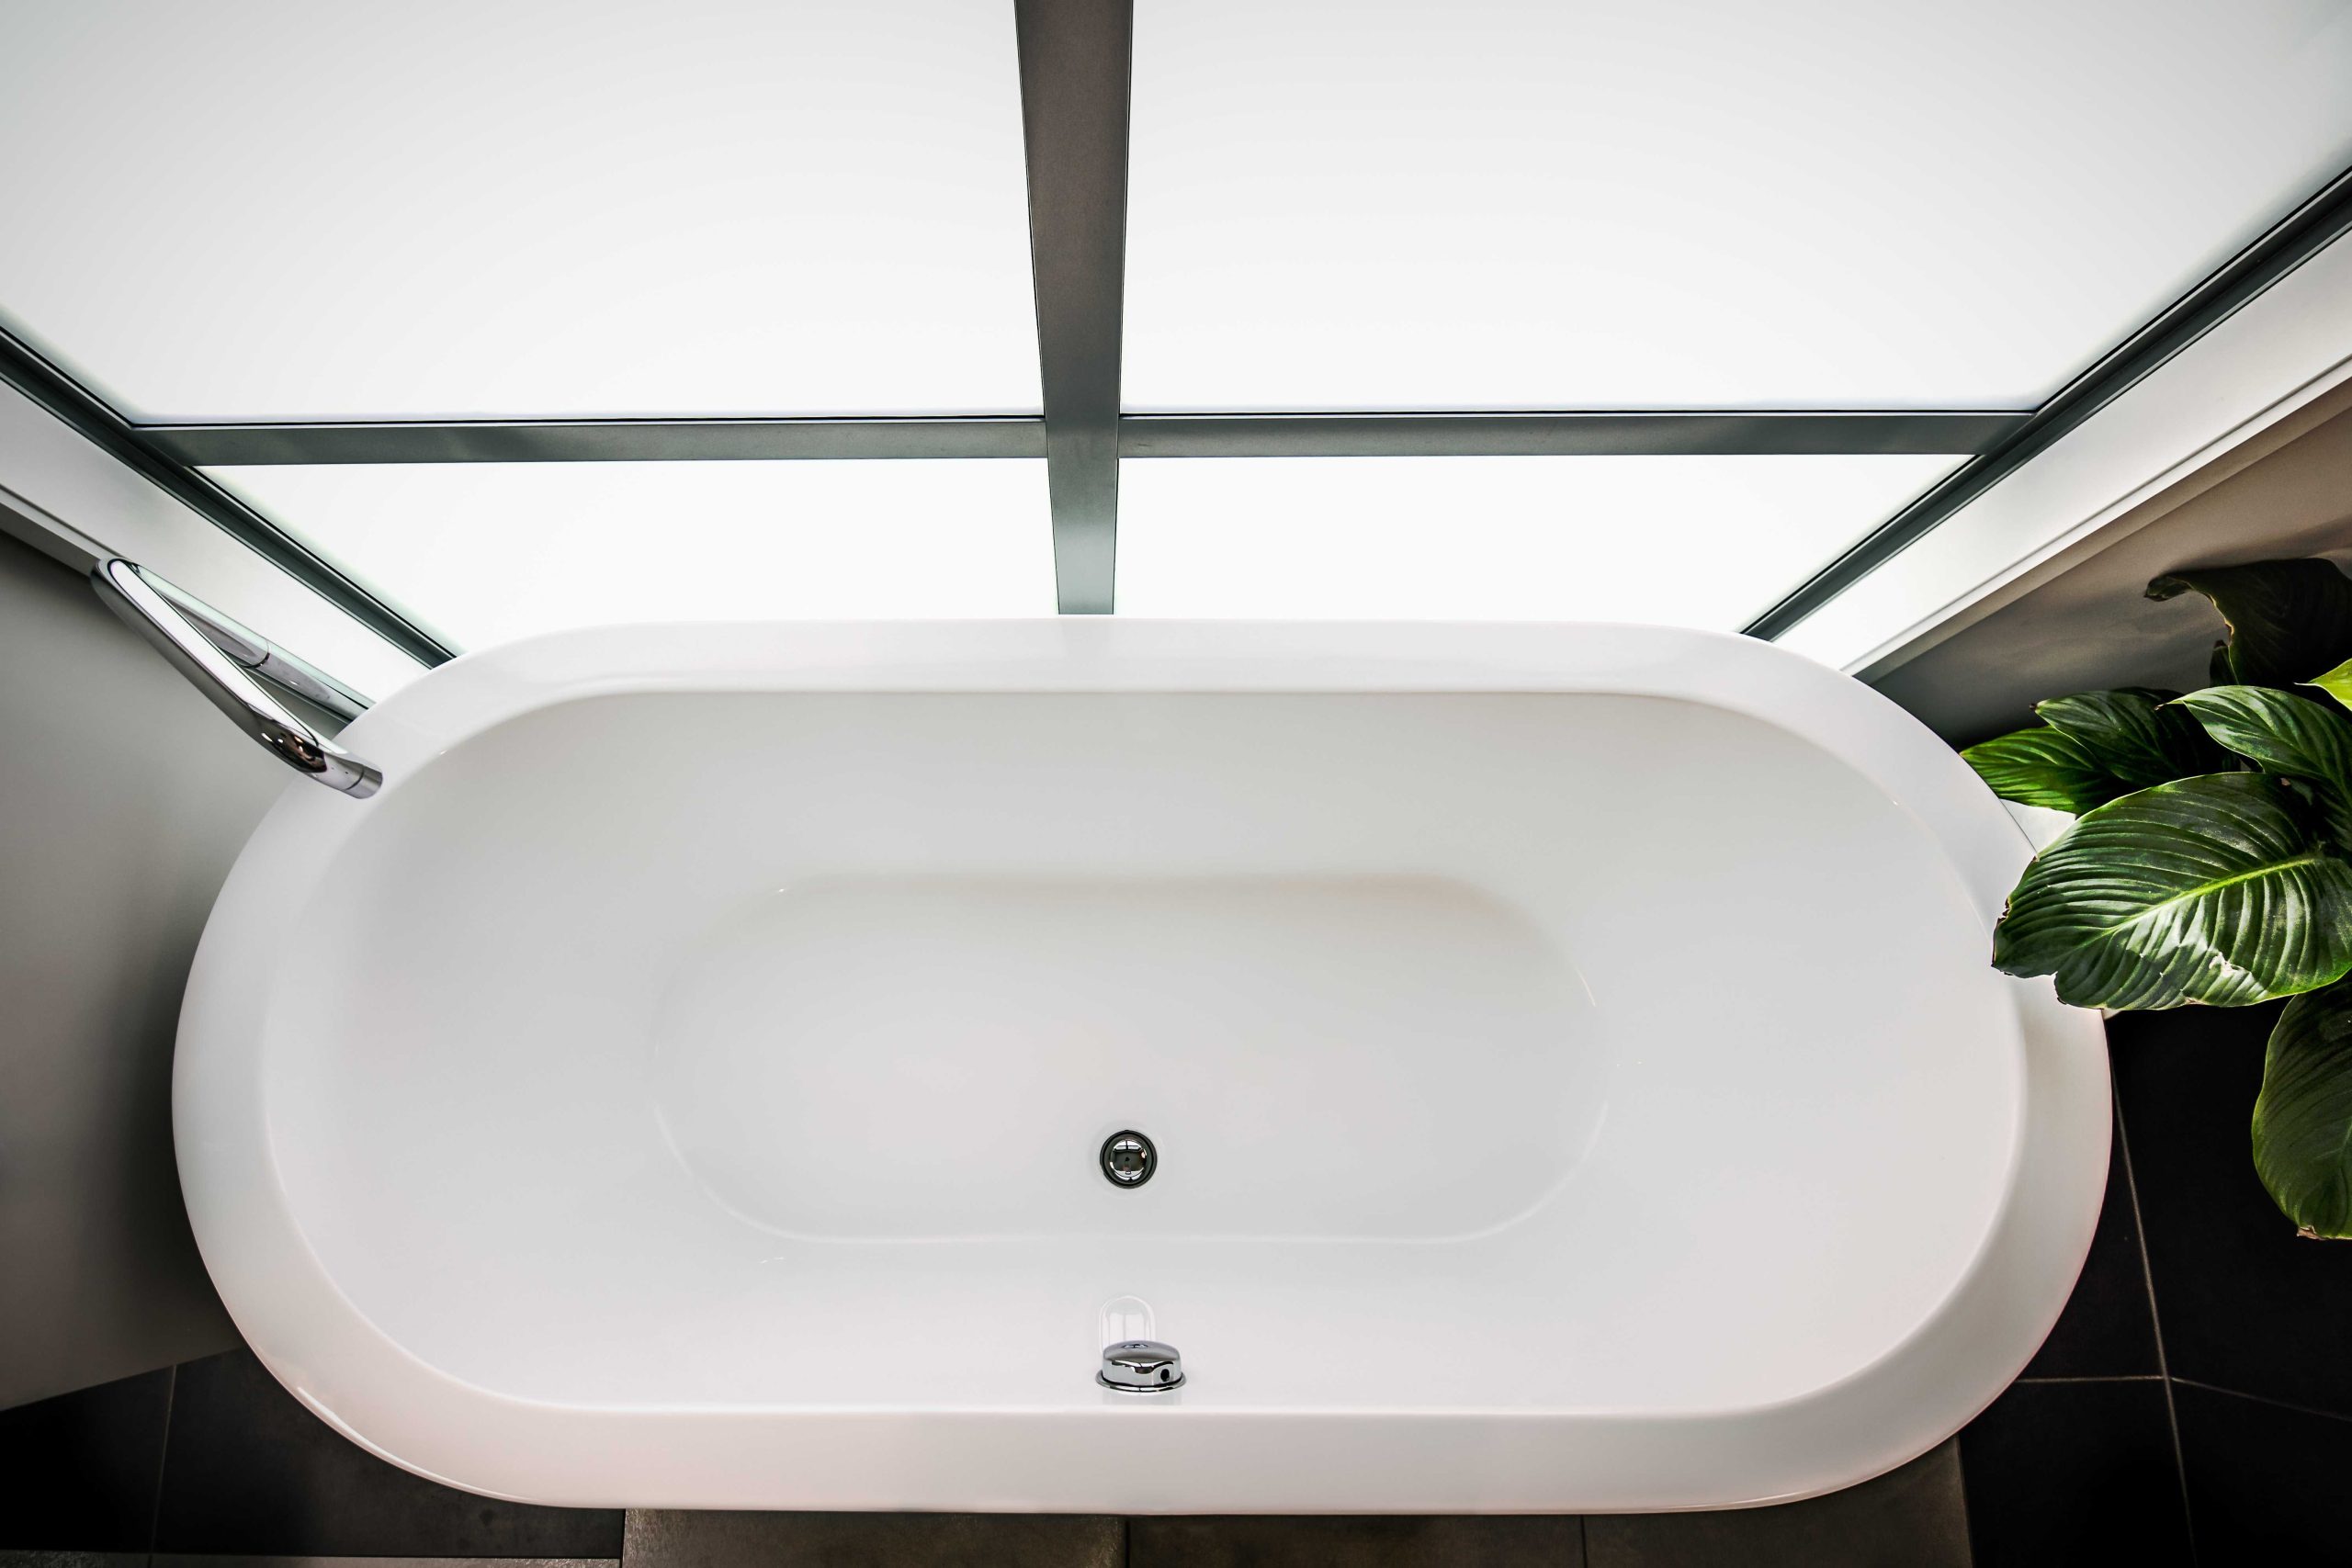 Home Remedies For A Slow Draining Tub, How Does A Bathtub Drain Work